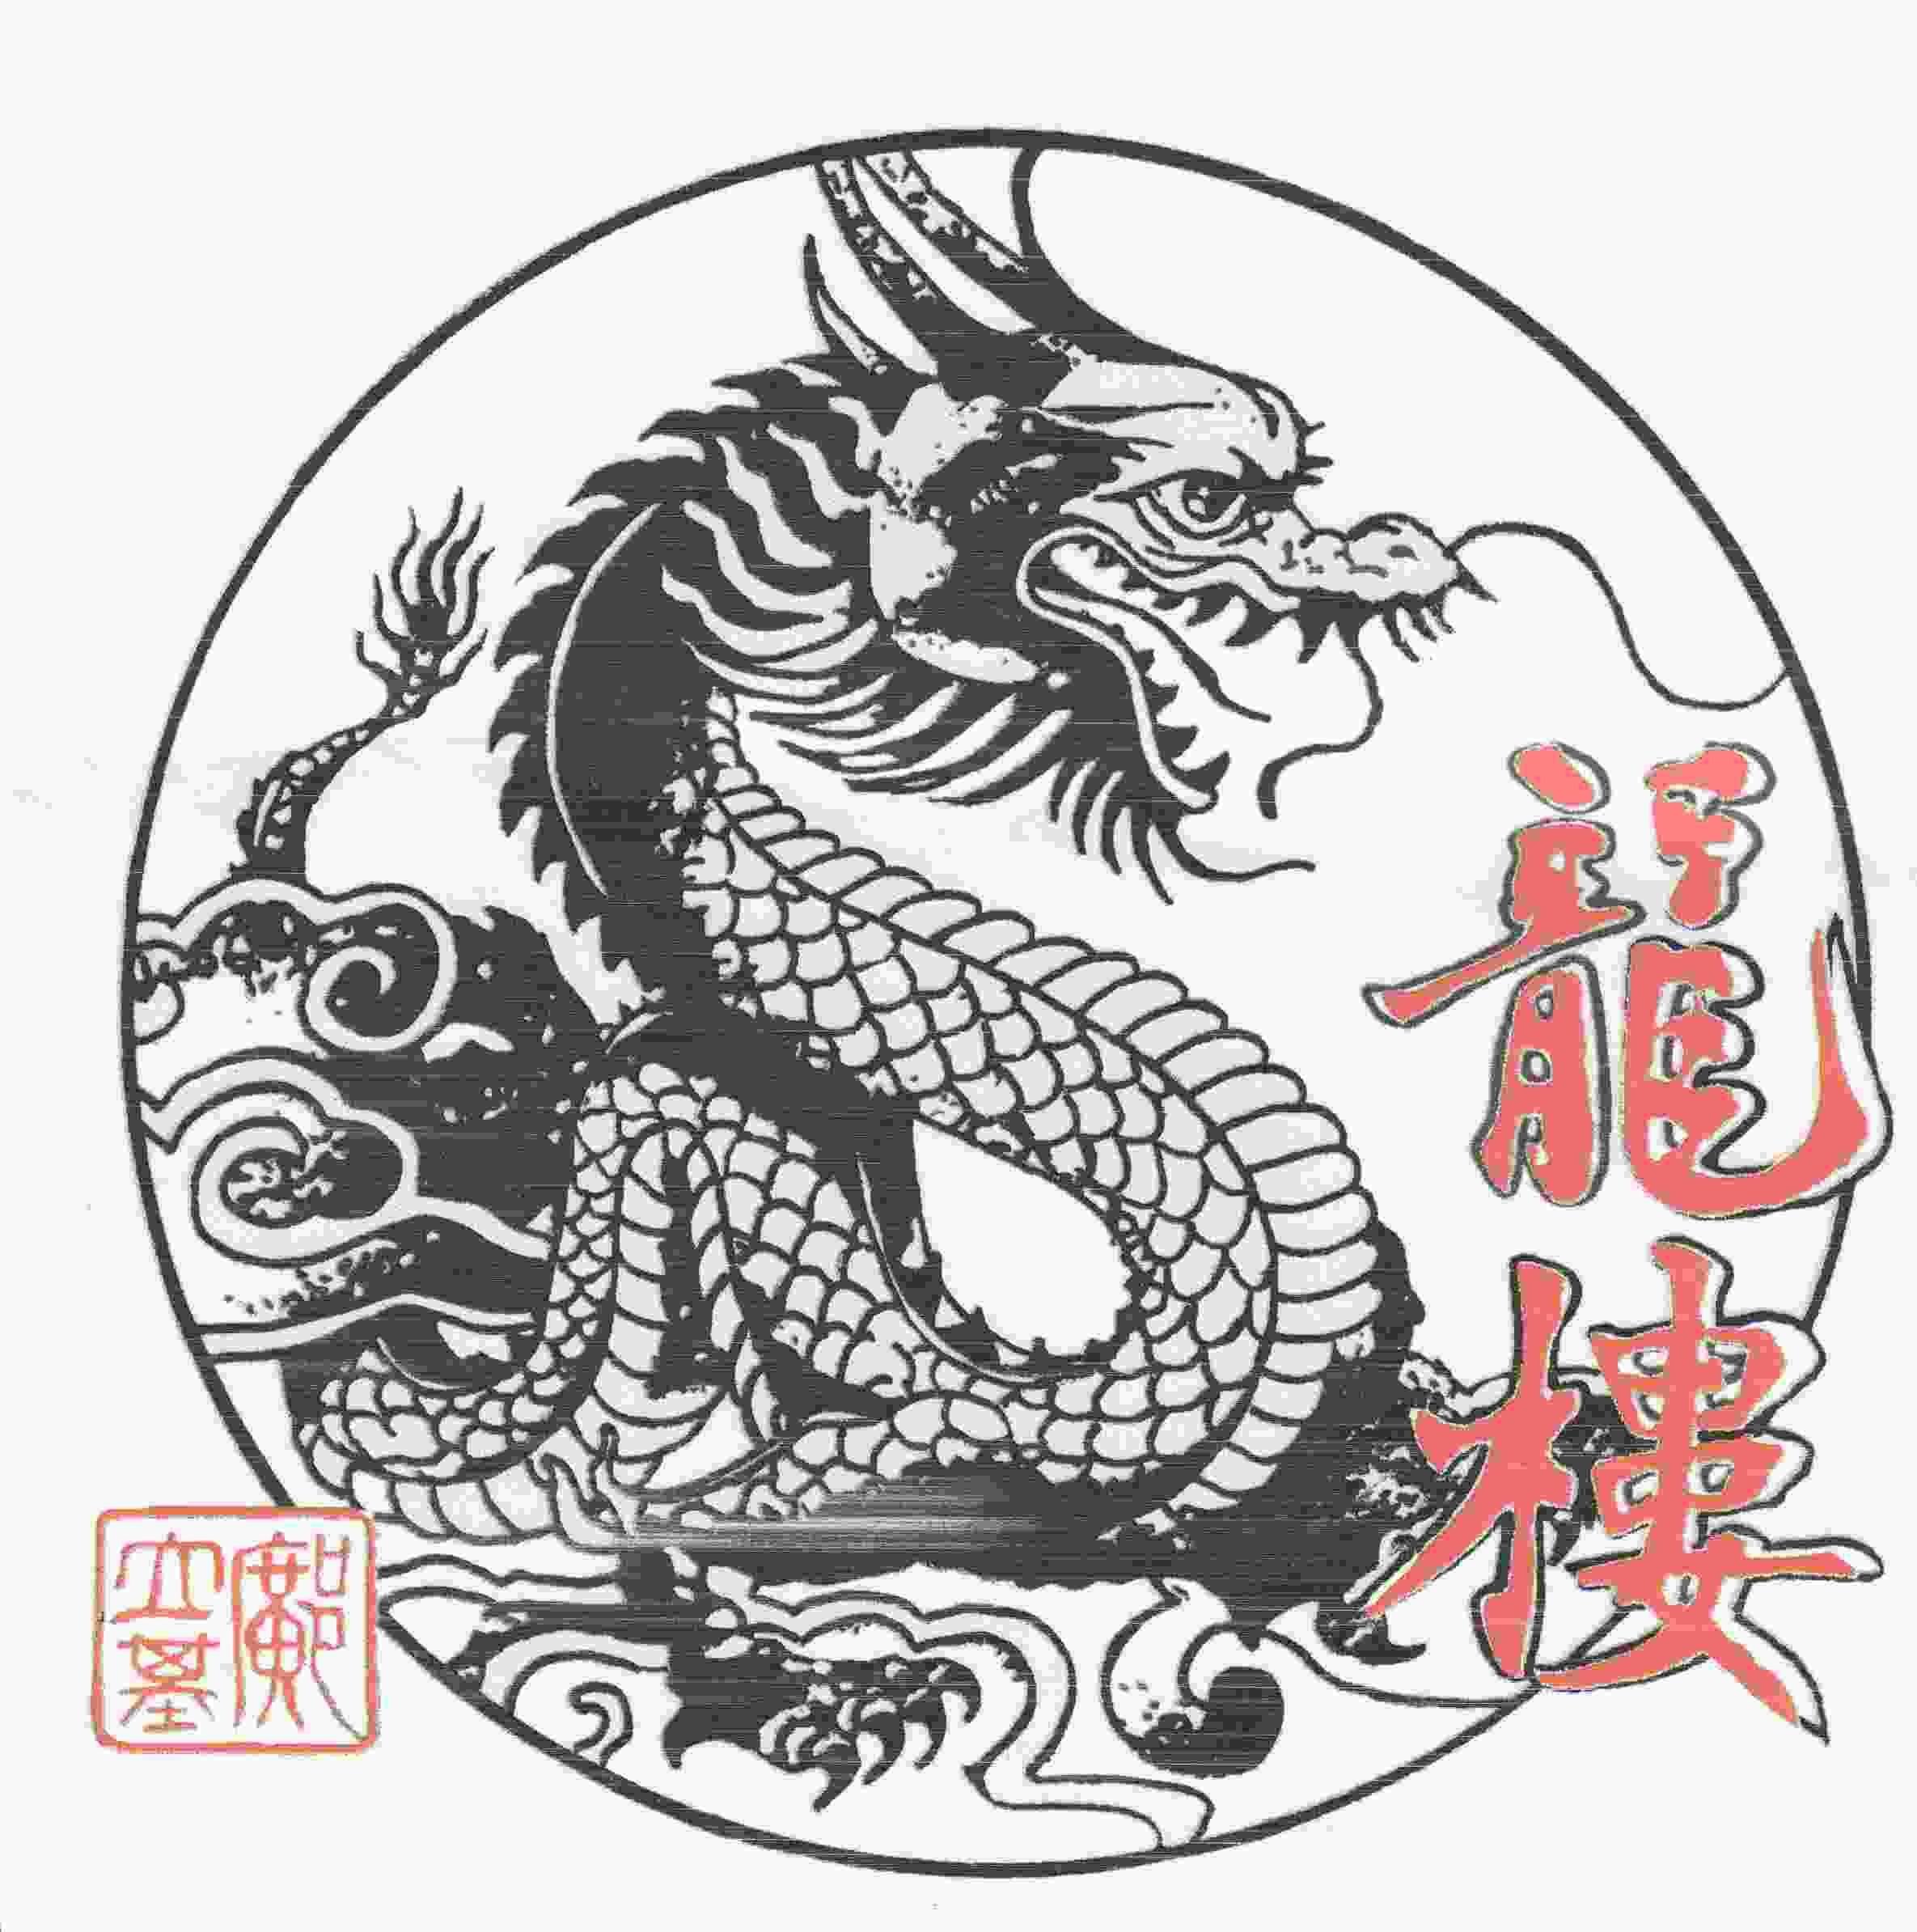 Китайский дракон значение. Китайский иероглиф дракон. Символ Китая дракон. Японский иероглиф дракон. Японский символ дракона.